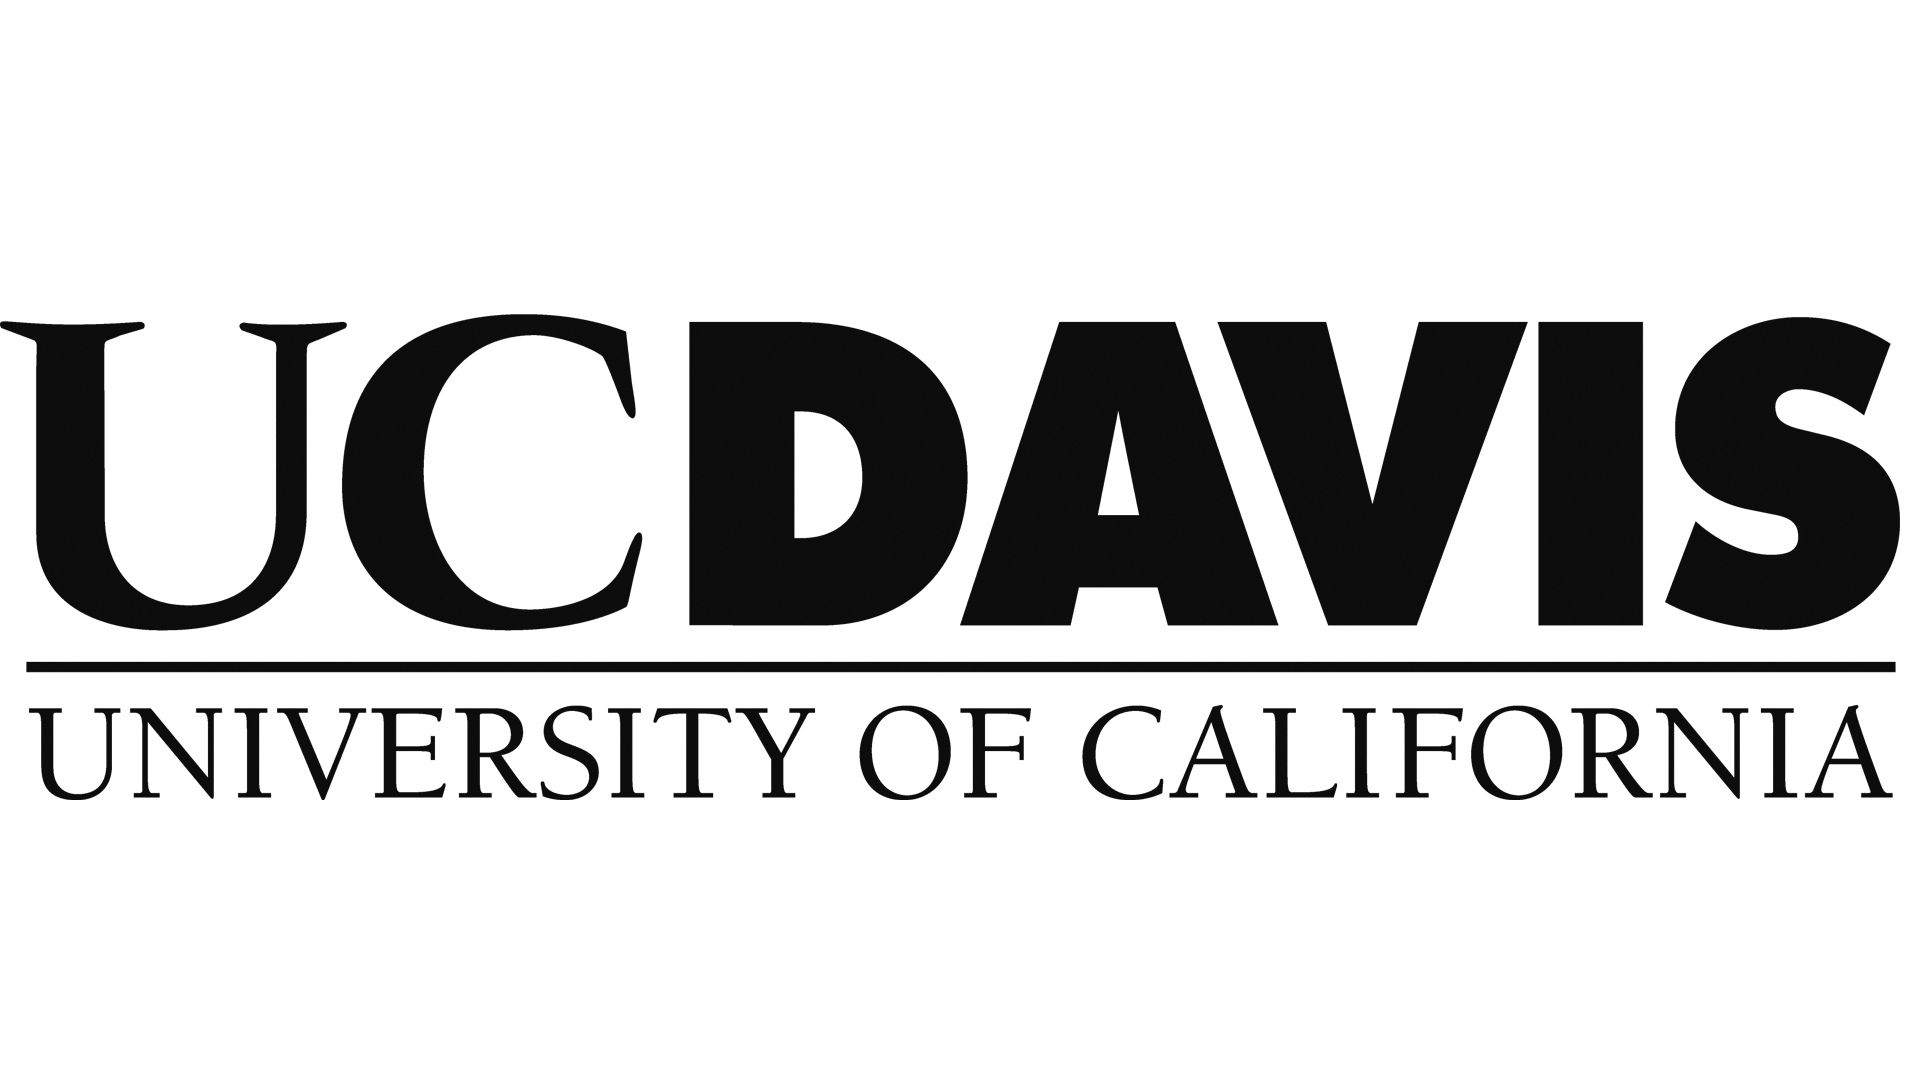 UC Davis, University of California logo